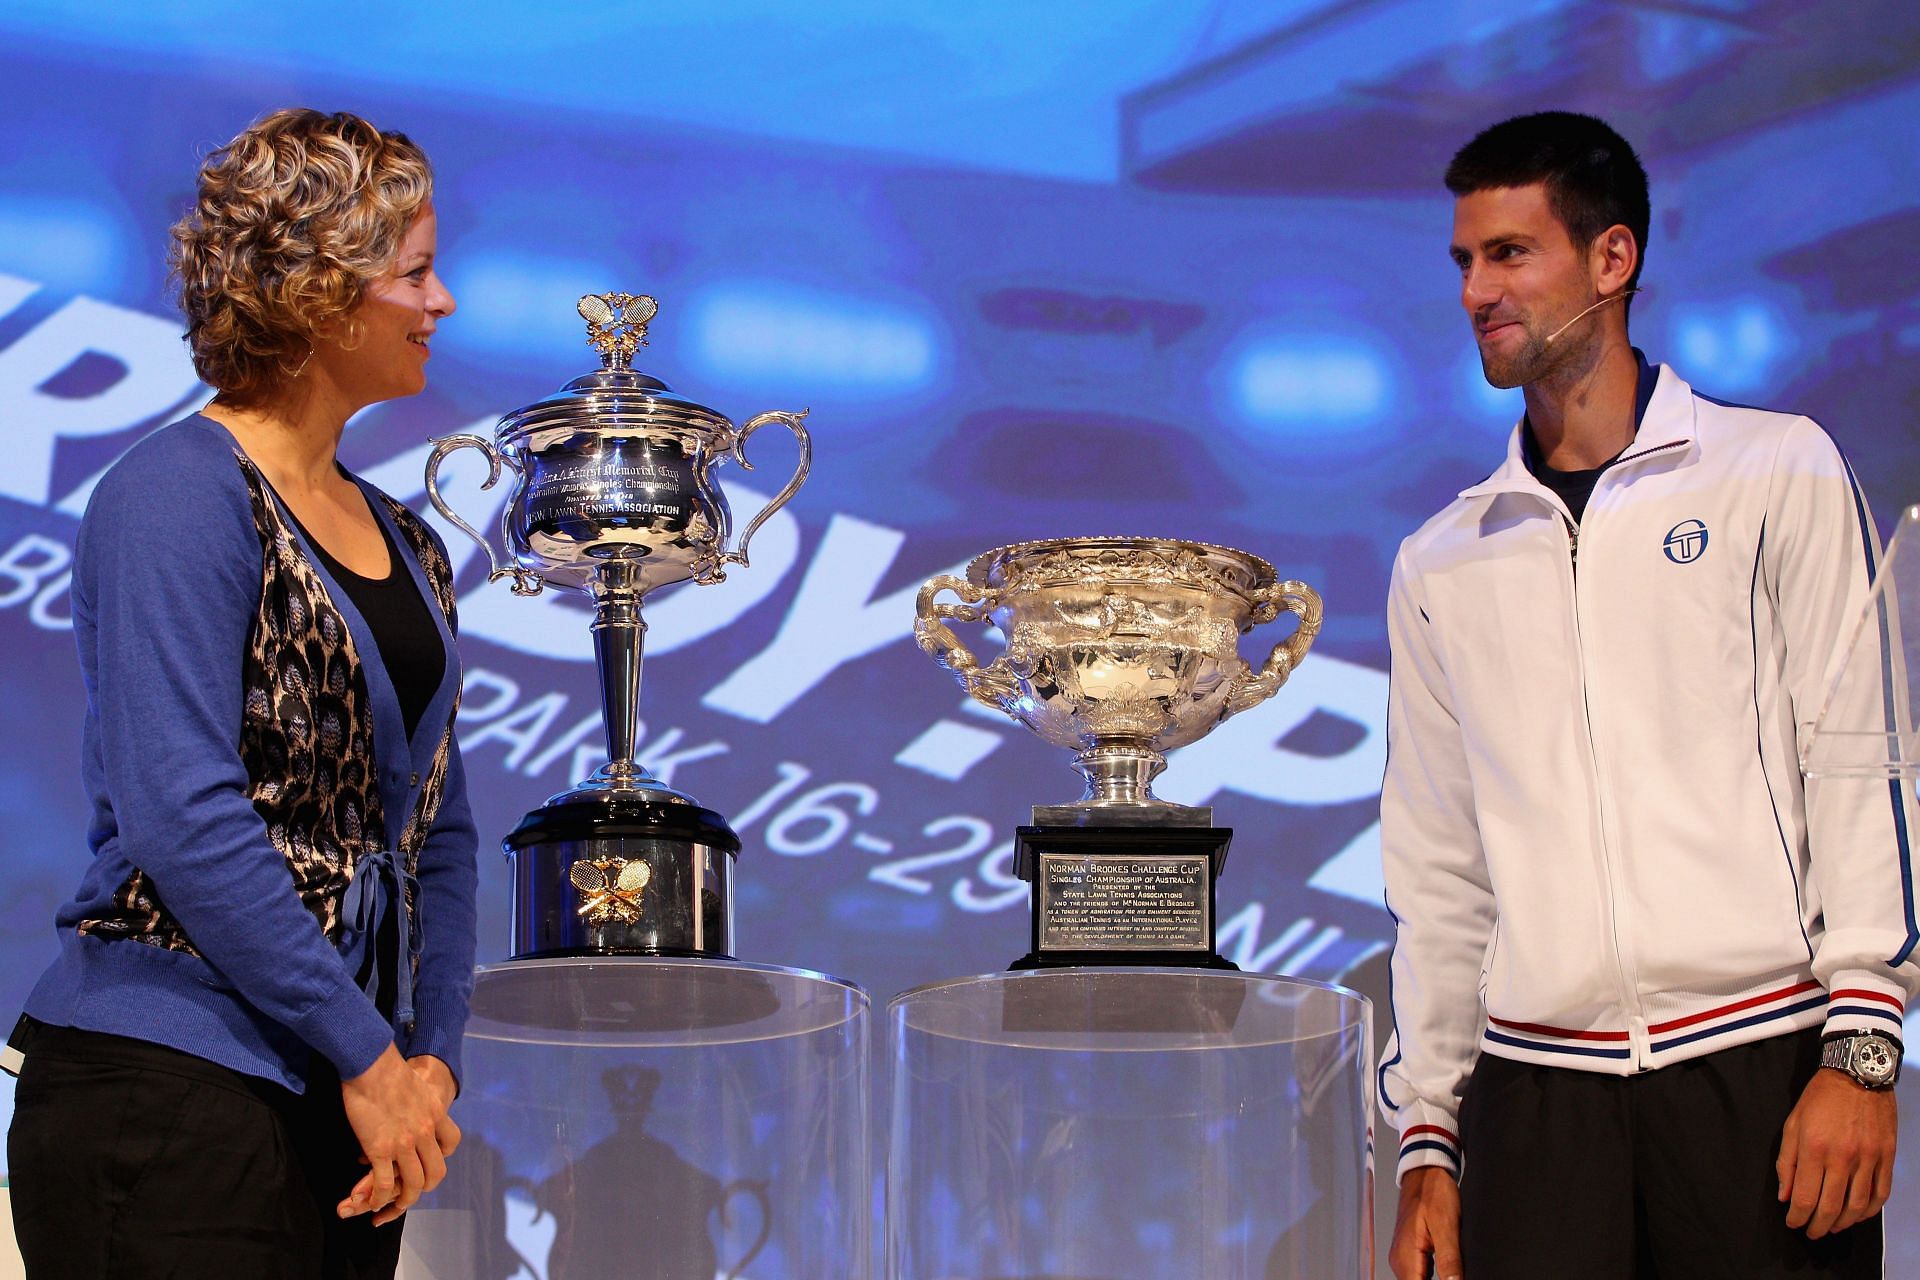 Kim Clijsters (L) and Novak Djokovic at the 2012 Australian Open Previews.